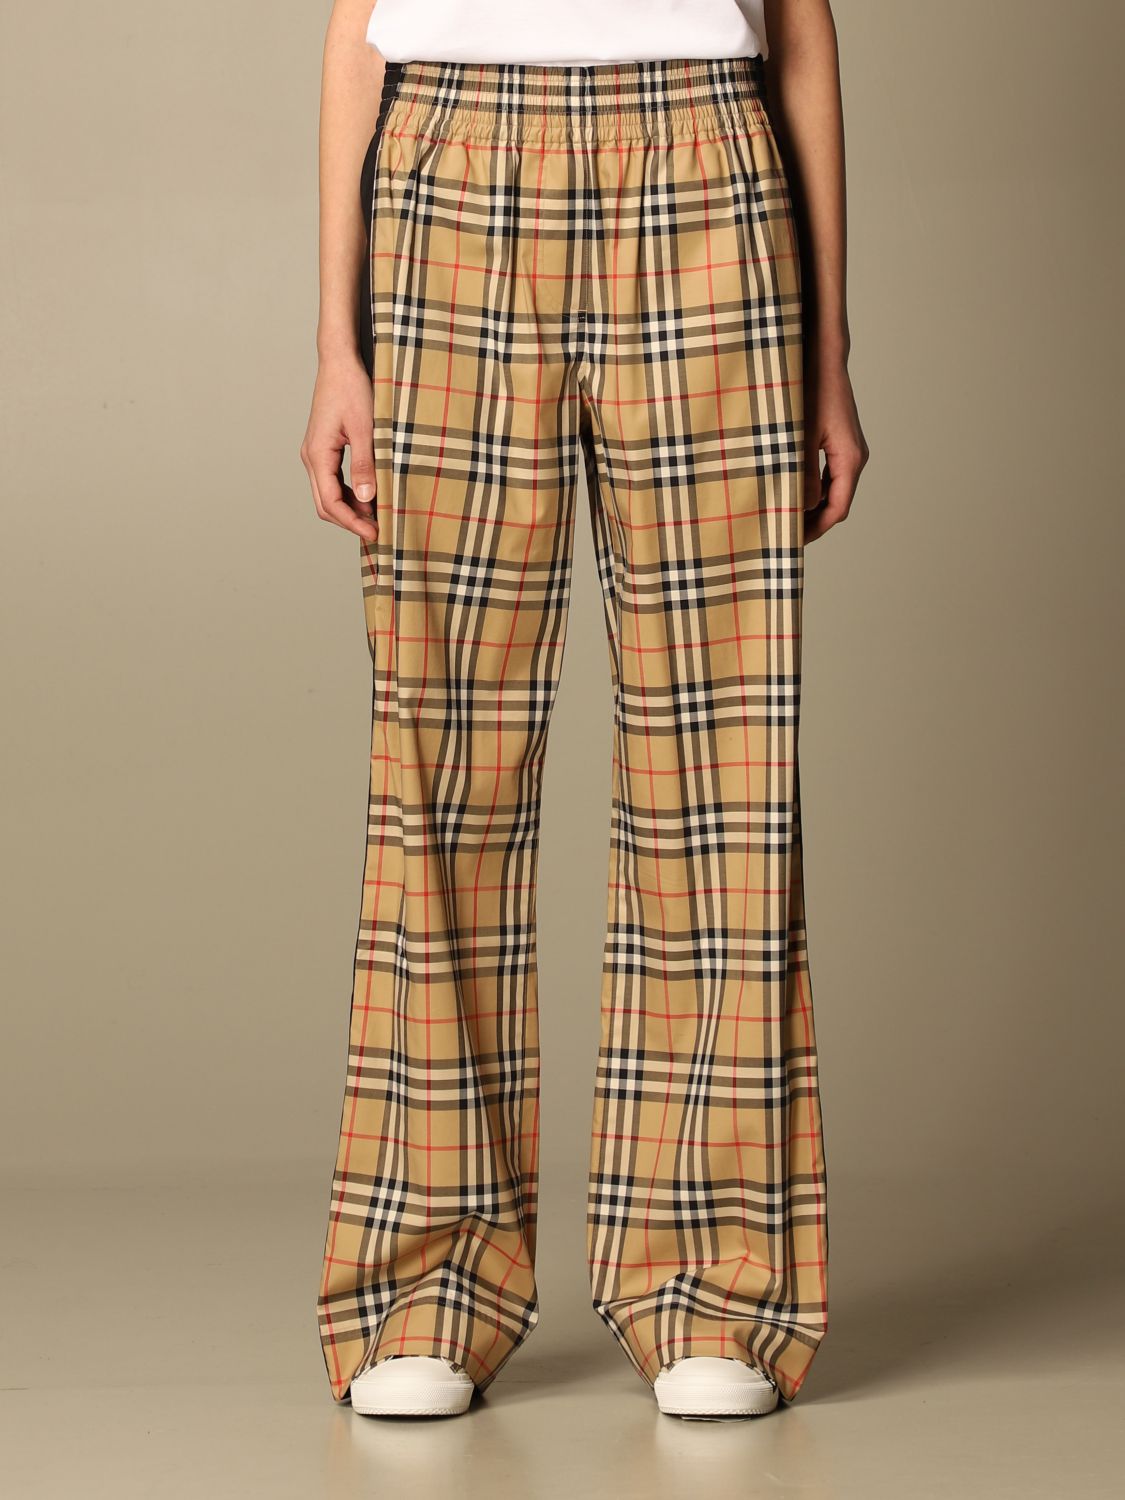 Burberry Body Plaid Pajama Pants Pink Size Small 28/34 | eBay